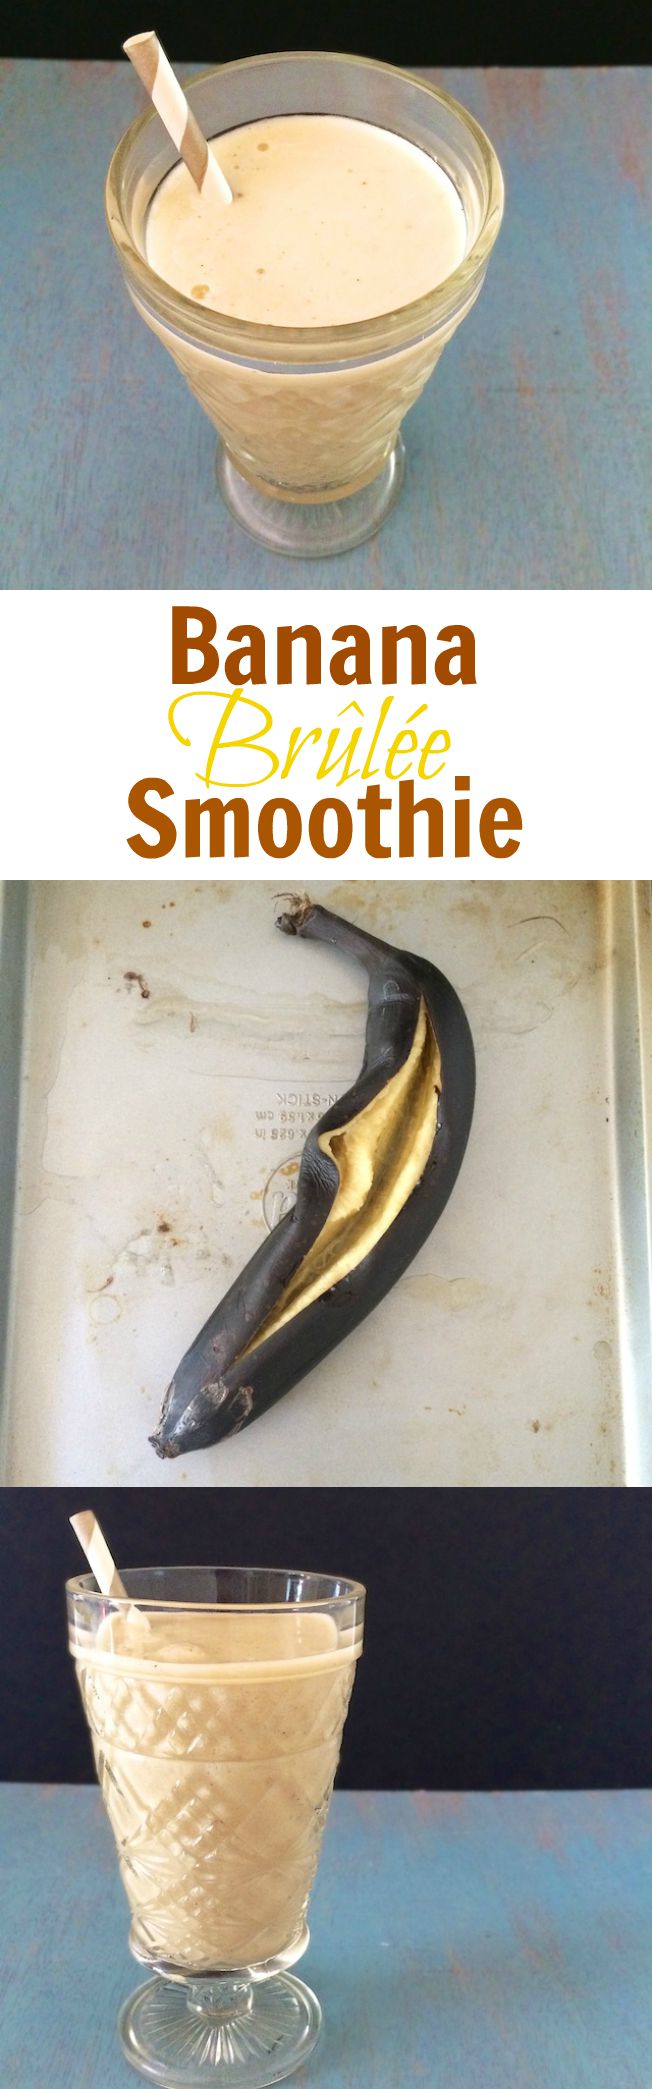 Banana Brulee Smoothie | Teaspoonofspice.com